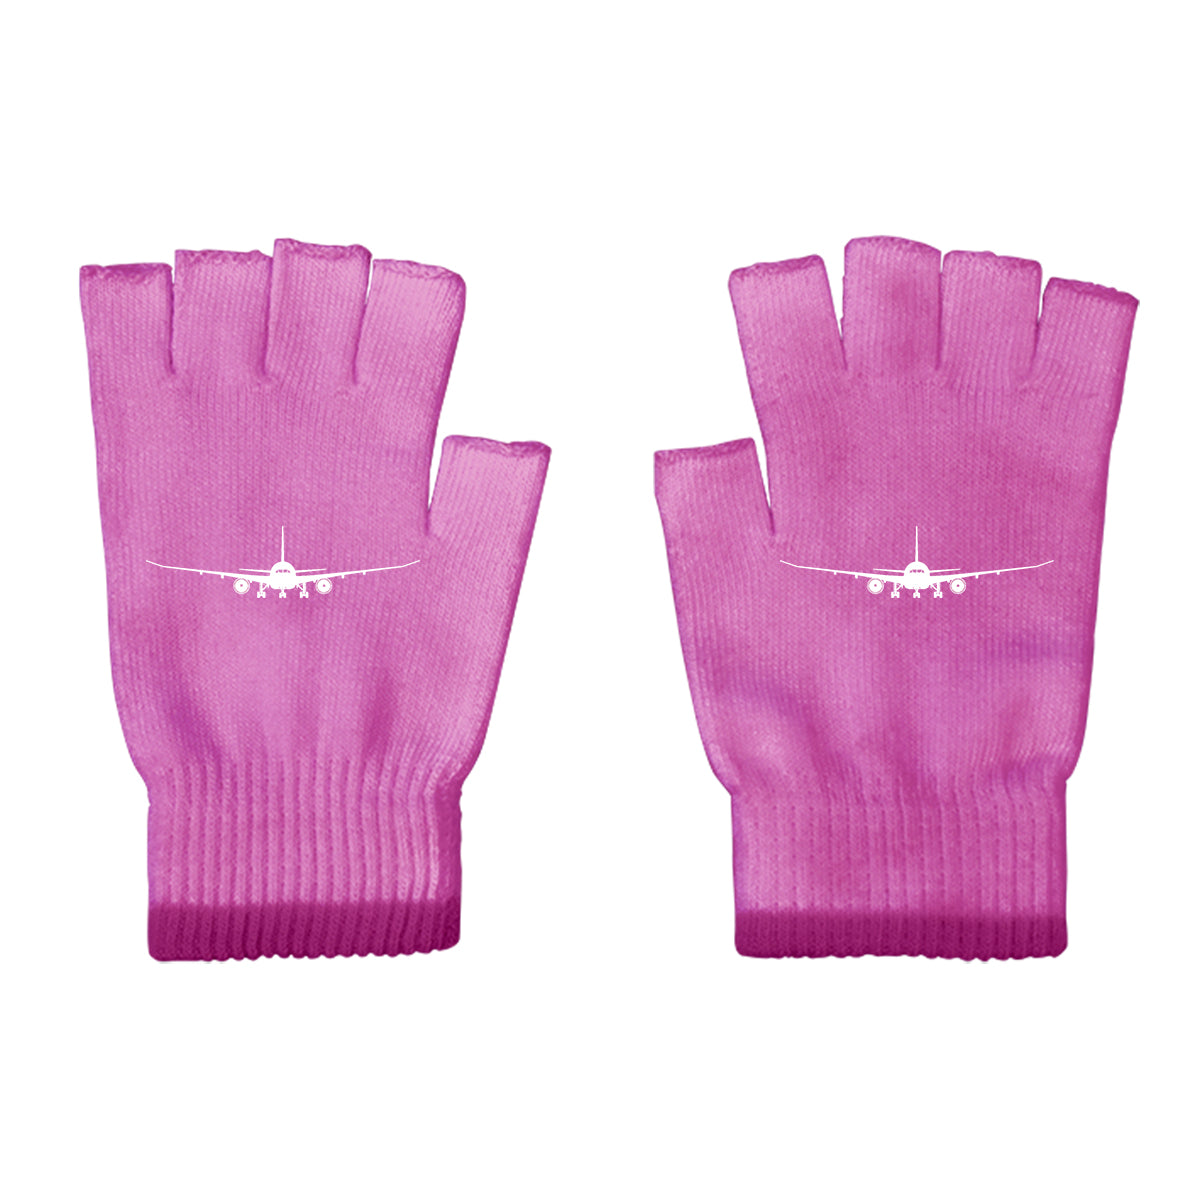 Boeing 787 Silhouette Designed Cut Gloves